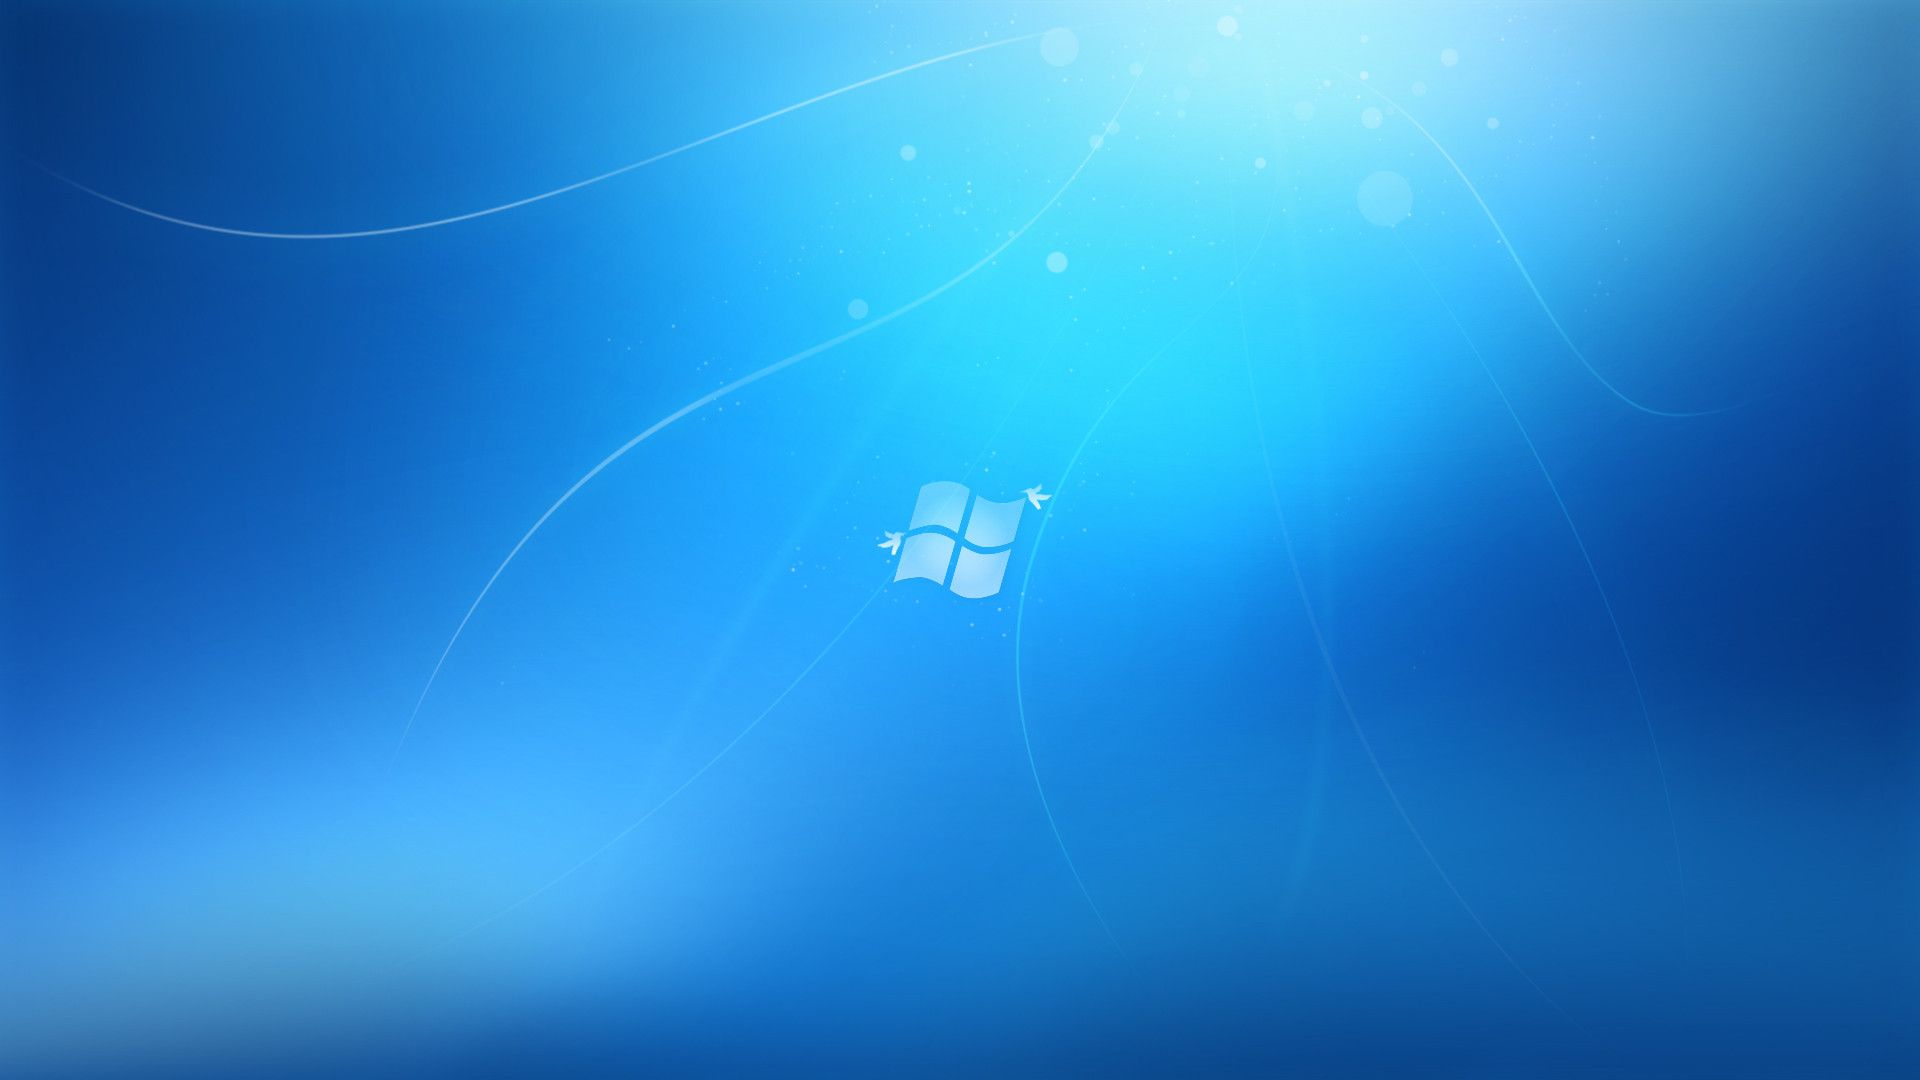 Windows 7 HD Backgrounds